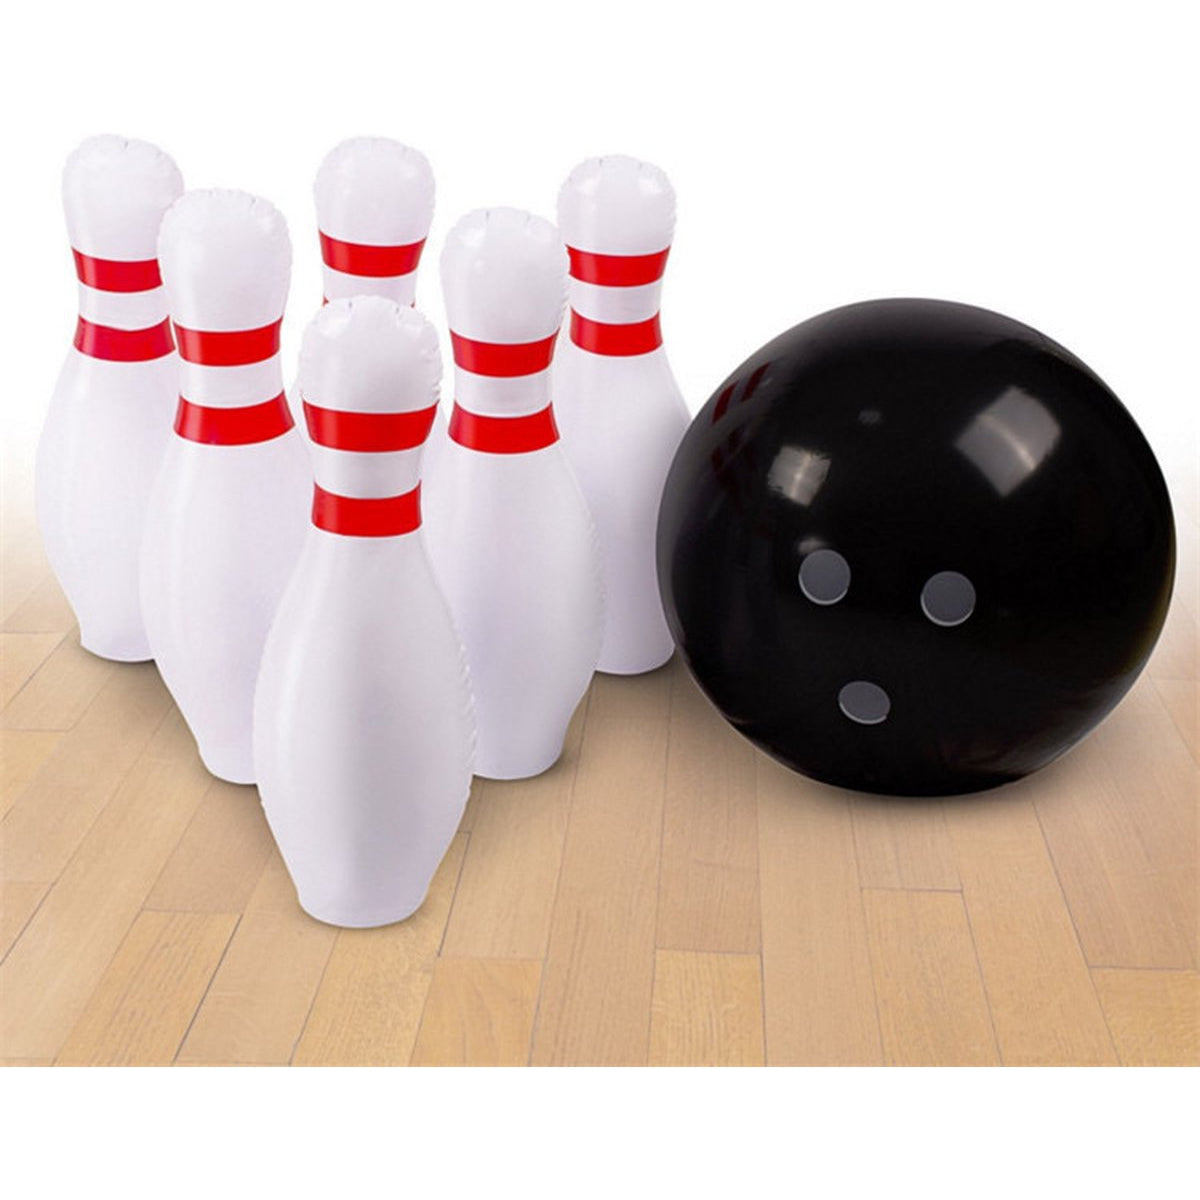 Nixnix - Mega XXL opblaasbare bowling set - 1m groot - Bowling bal - Erg groot - Speelgoed